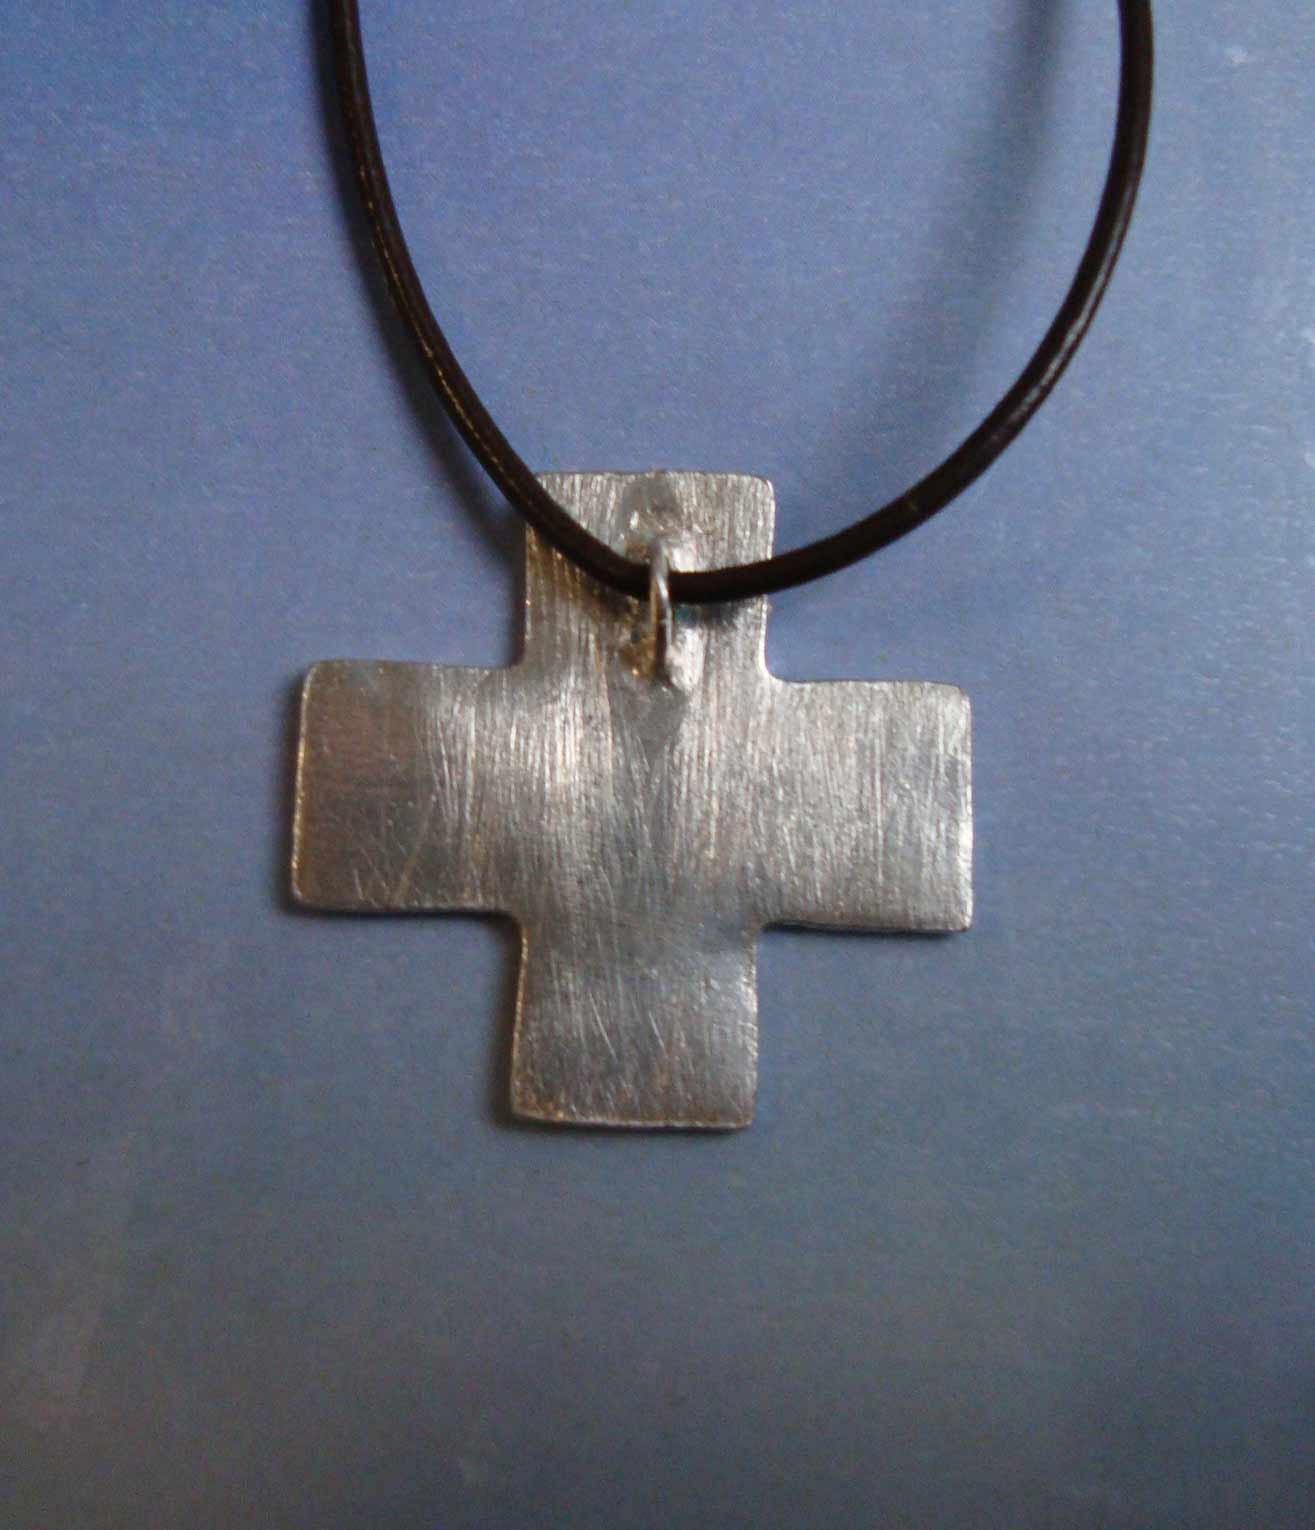 Greek cross with symbols 4 season charm amulet sterling silver | Etsy